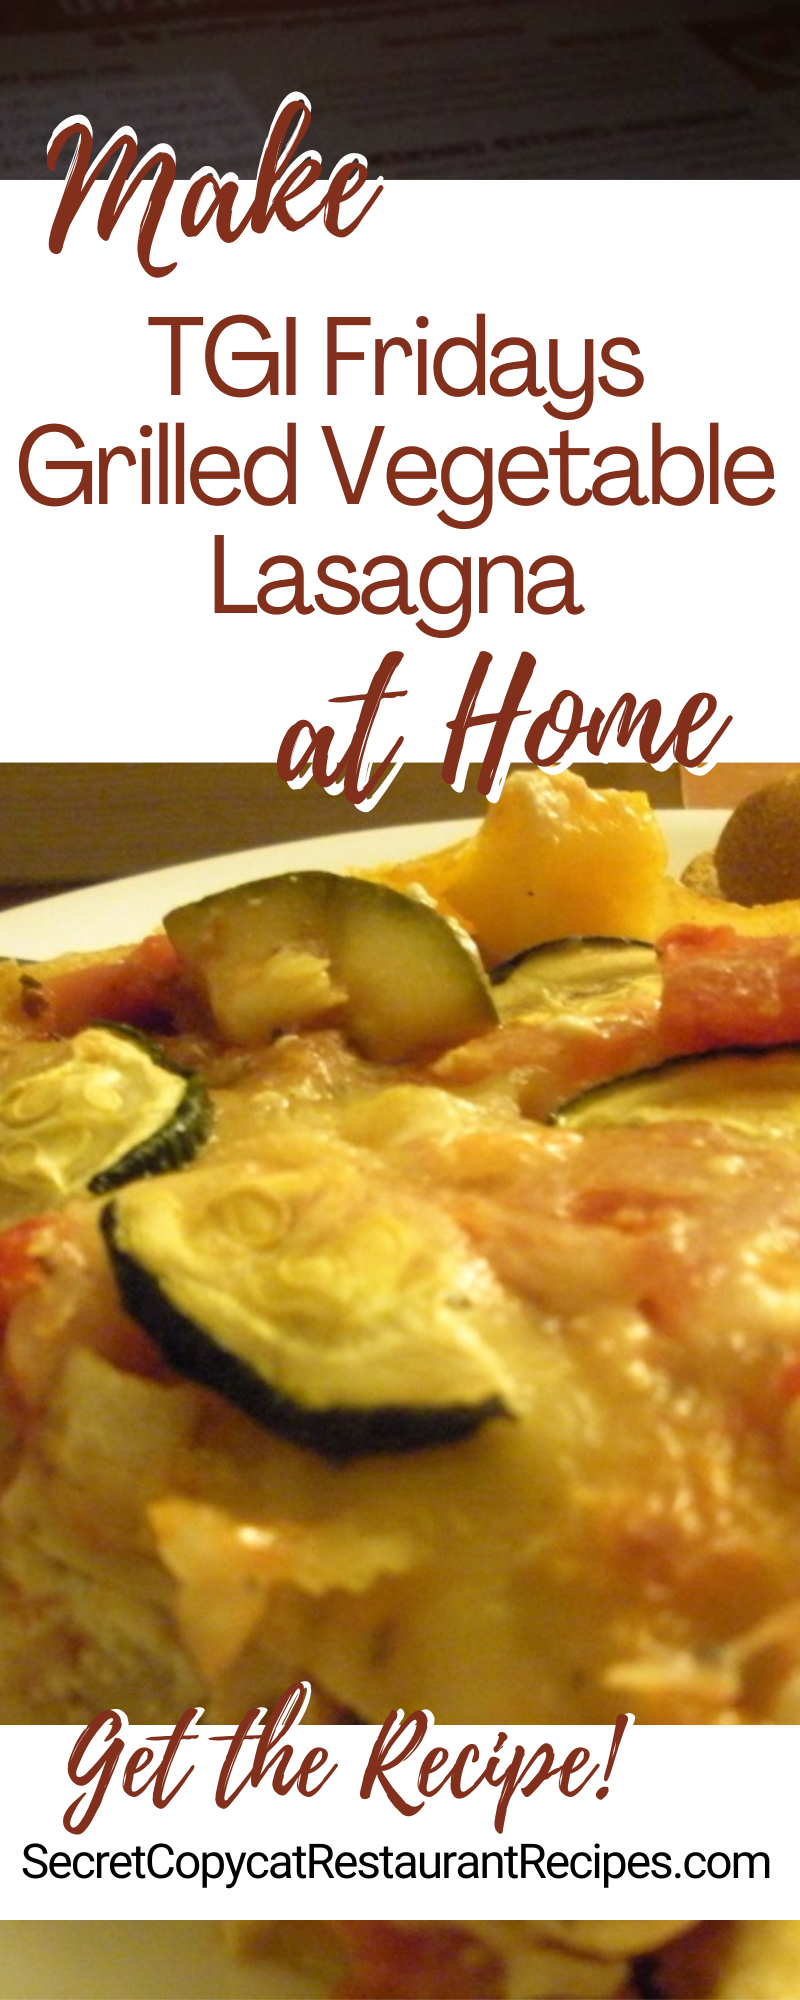 TGI Fridays Grilled Vegetable Lasagna Recipe